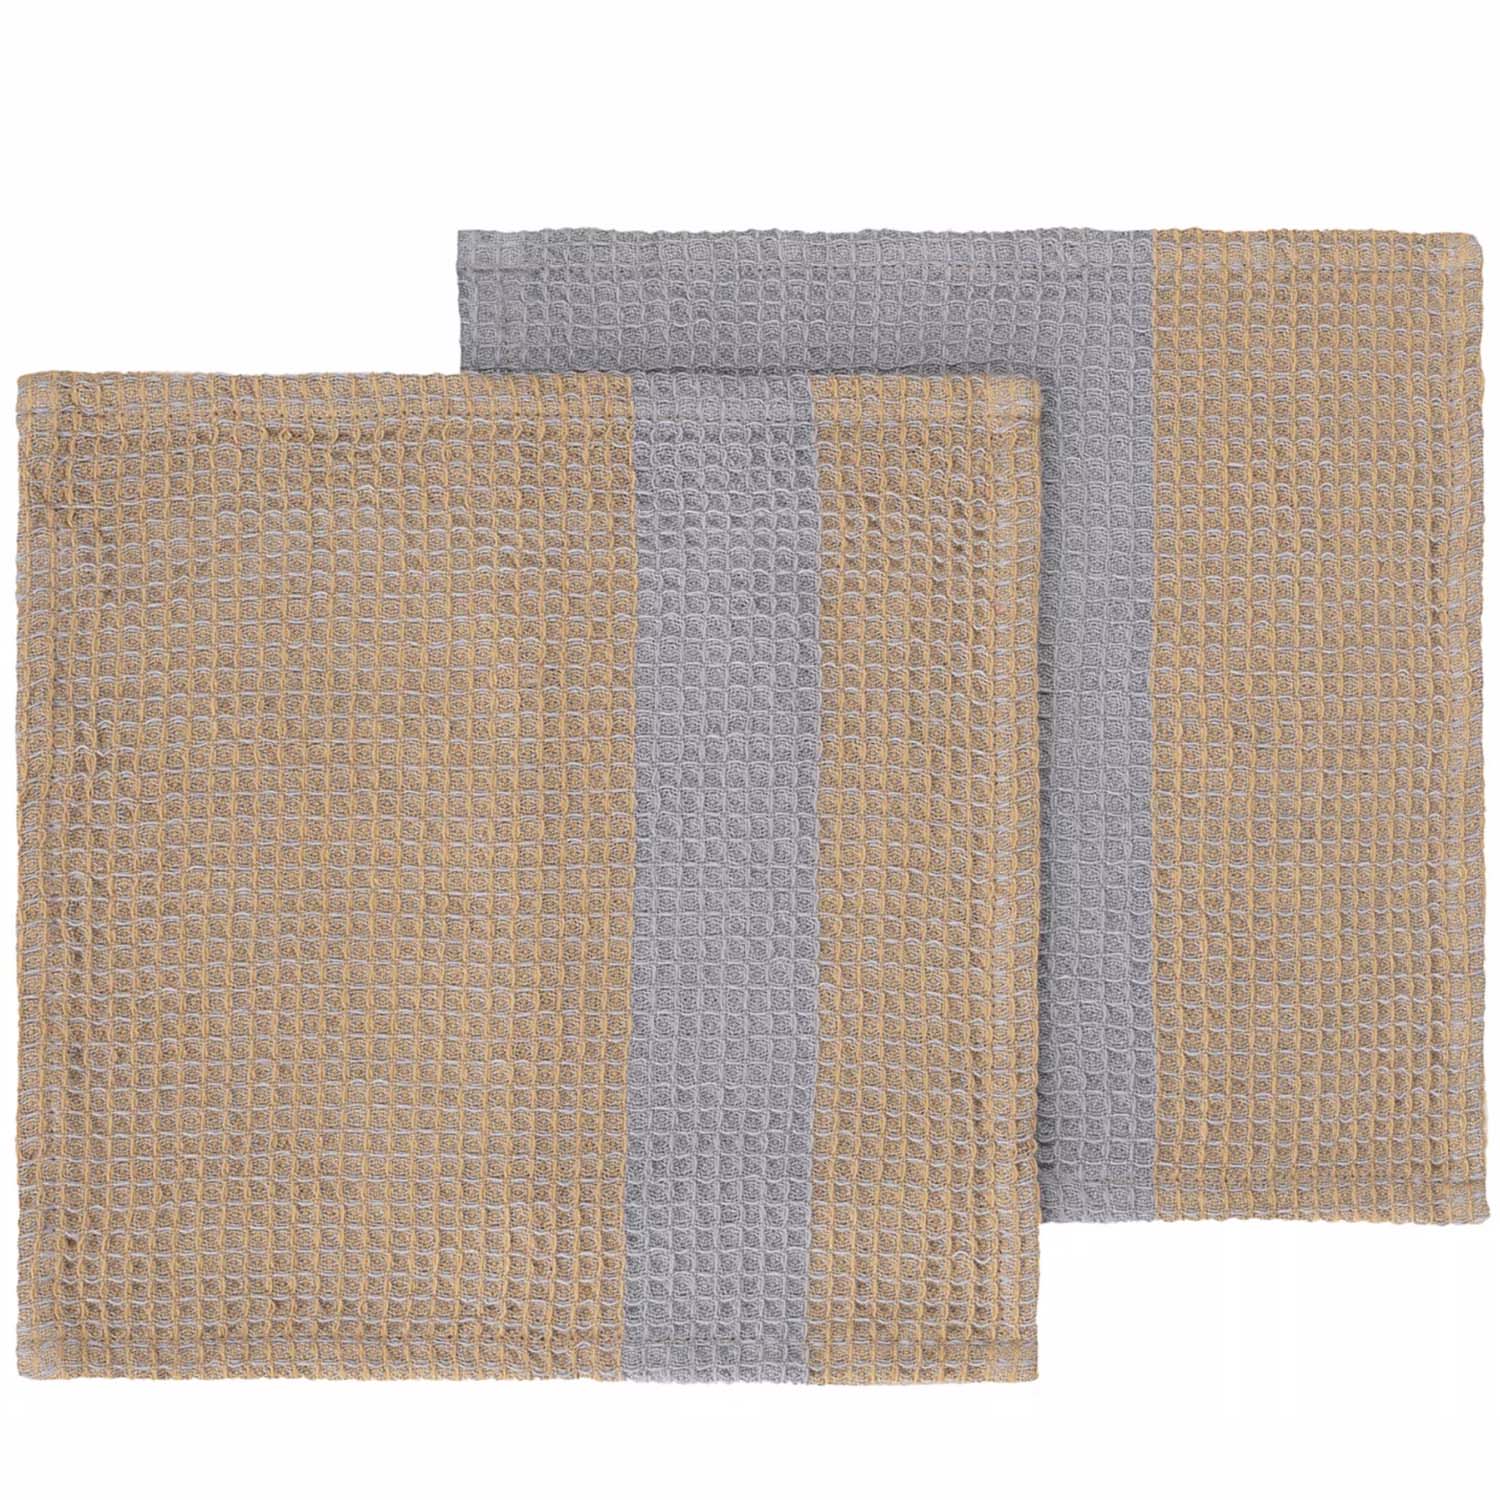 Gano Organic Cotton 2 Piece Dish Towel Set Color: Steel Gray/Tan